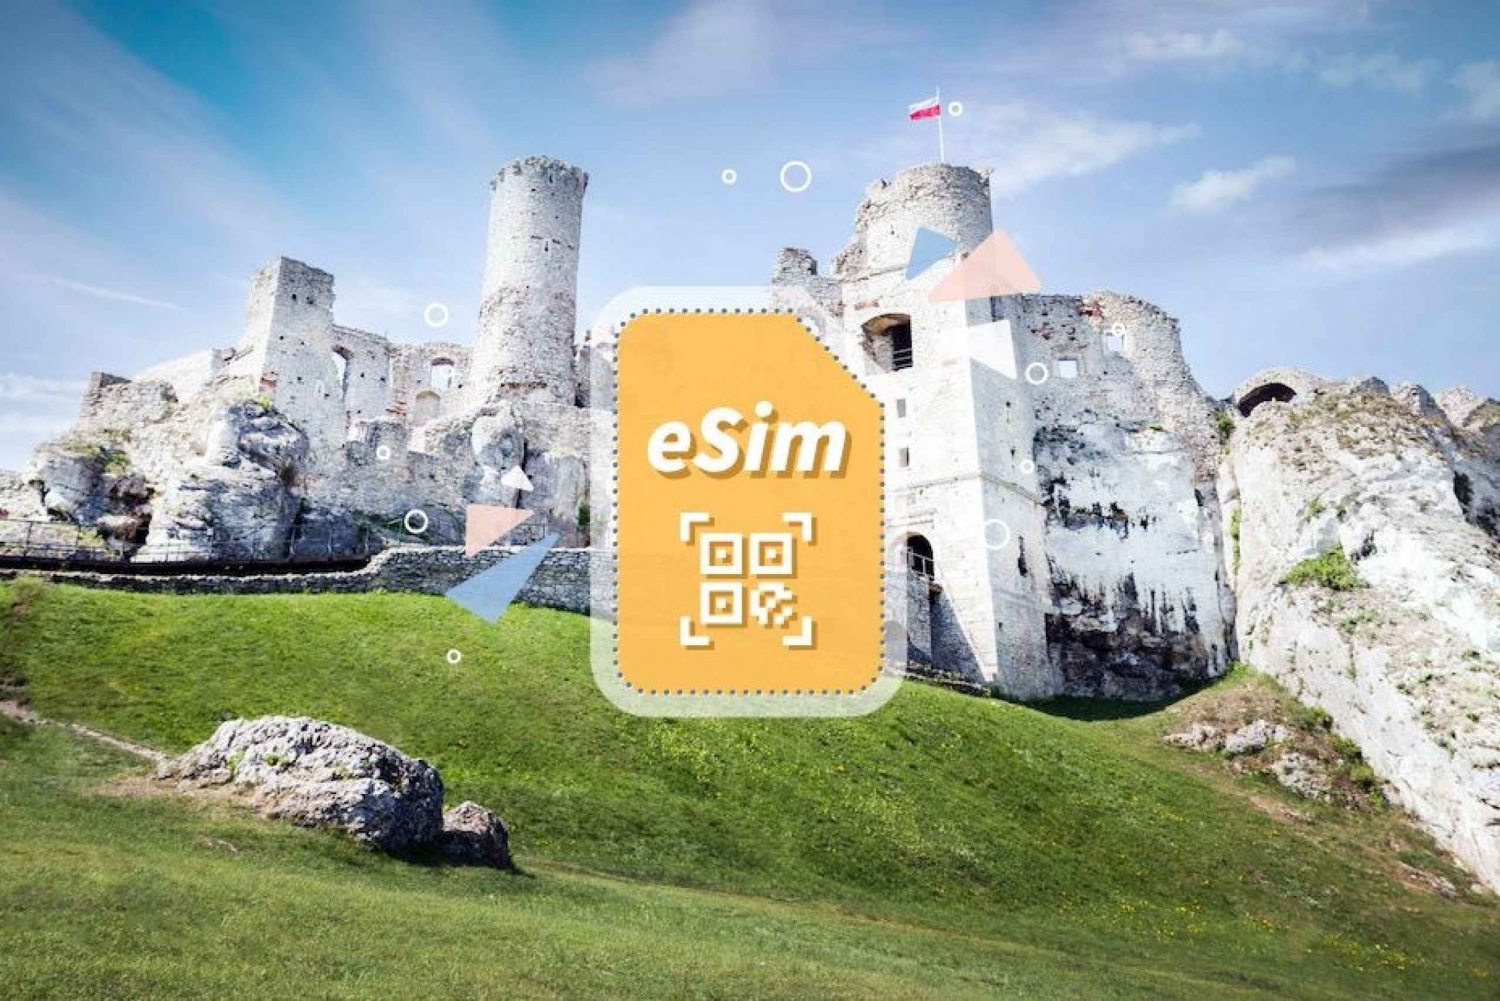 Polonia/Europa: Plan de datos móviles 5G eSim